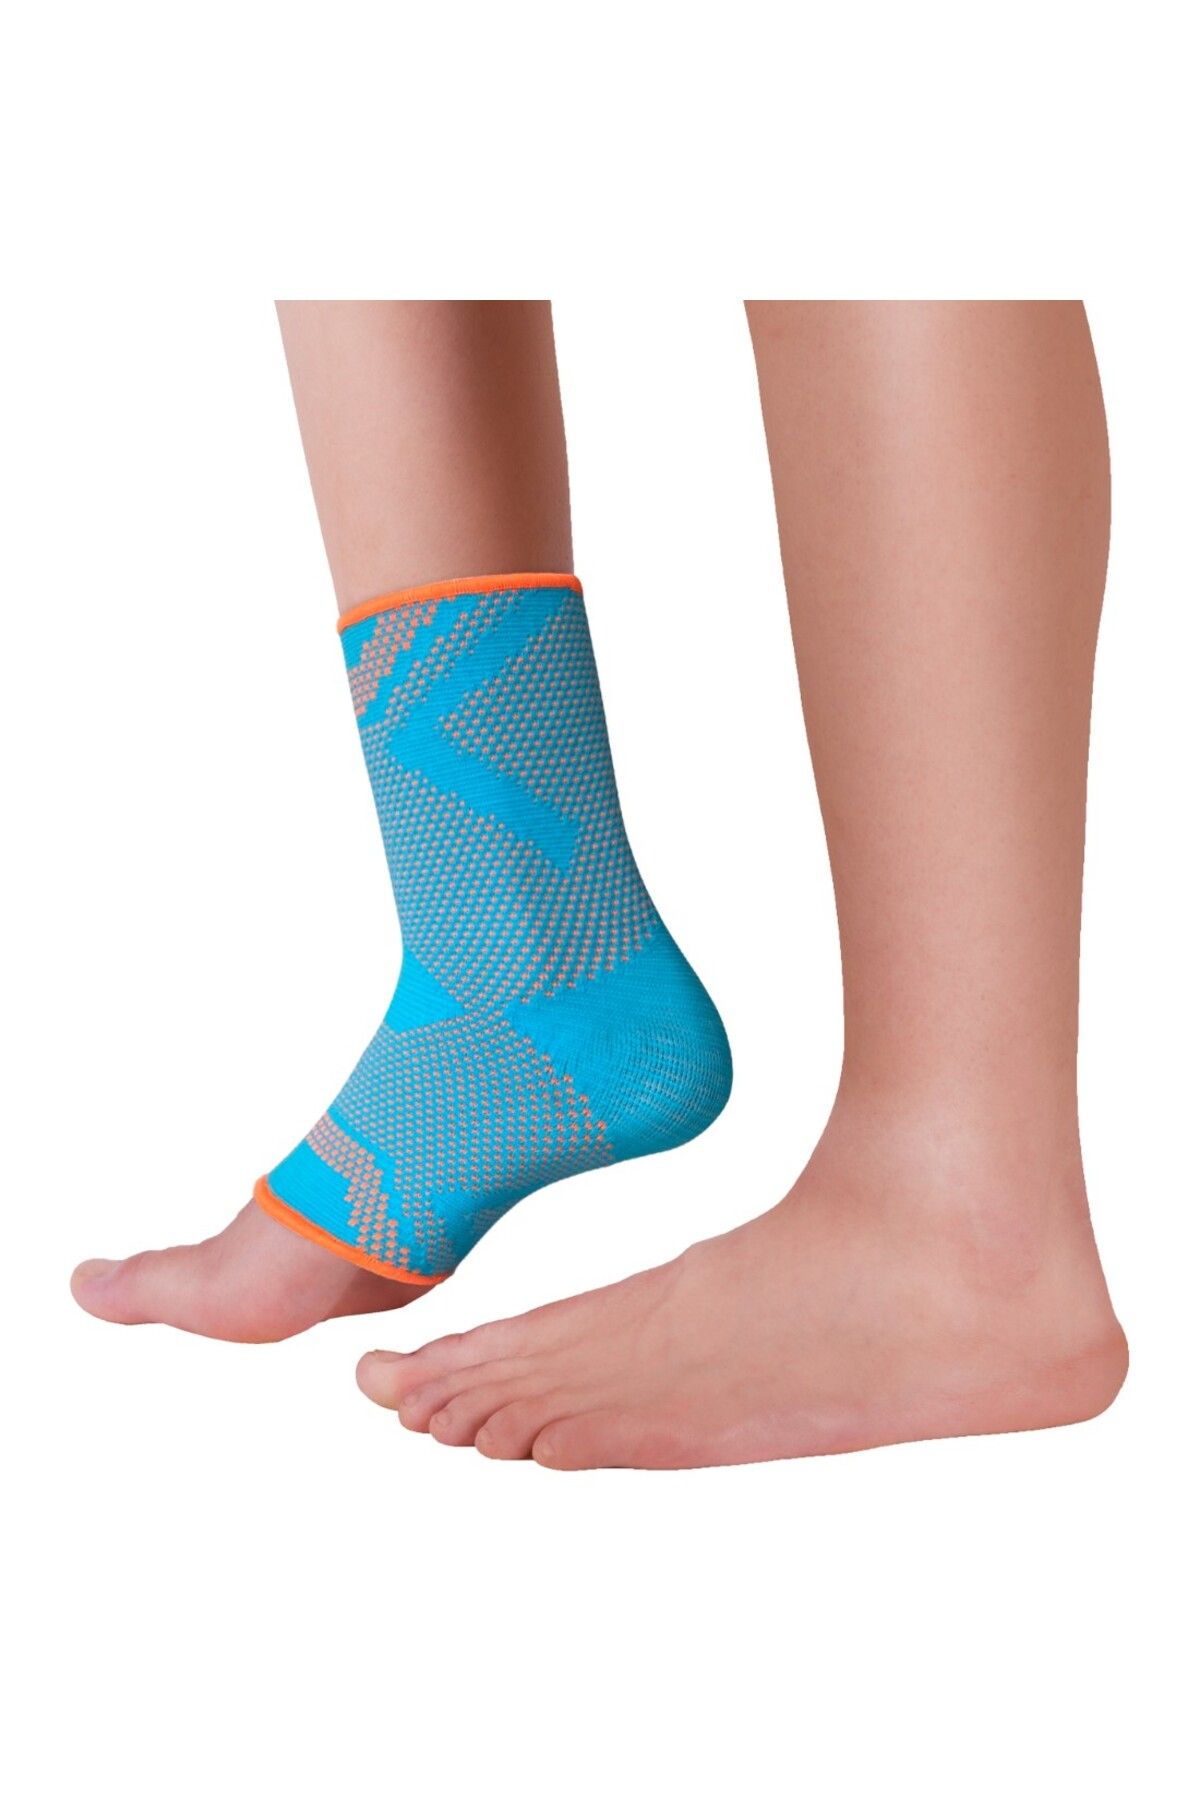 Orthocare 7911 Malleocare Easy Örme elastik ayak bilekliği